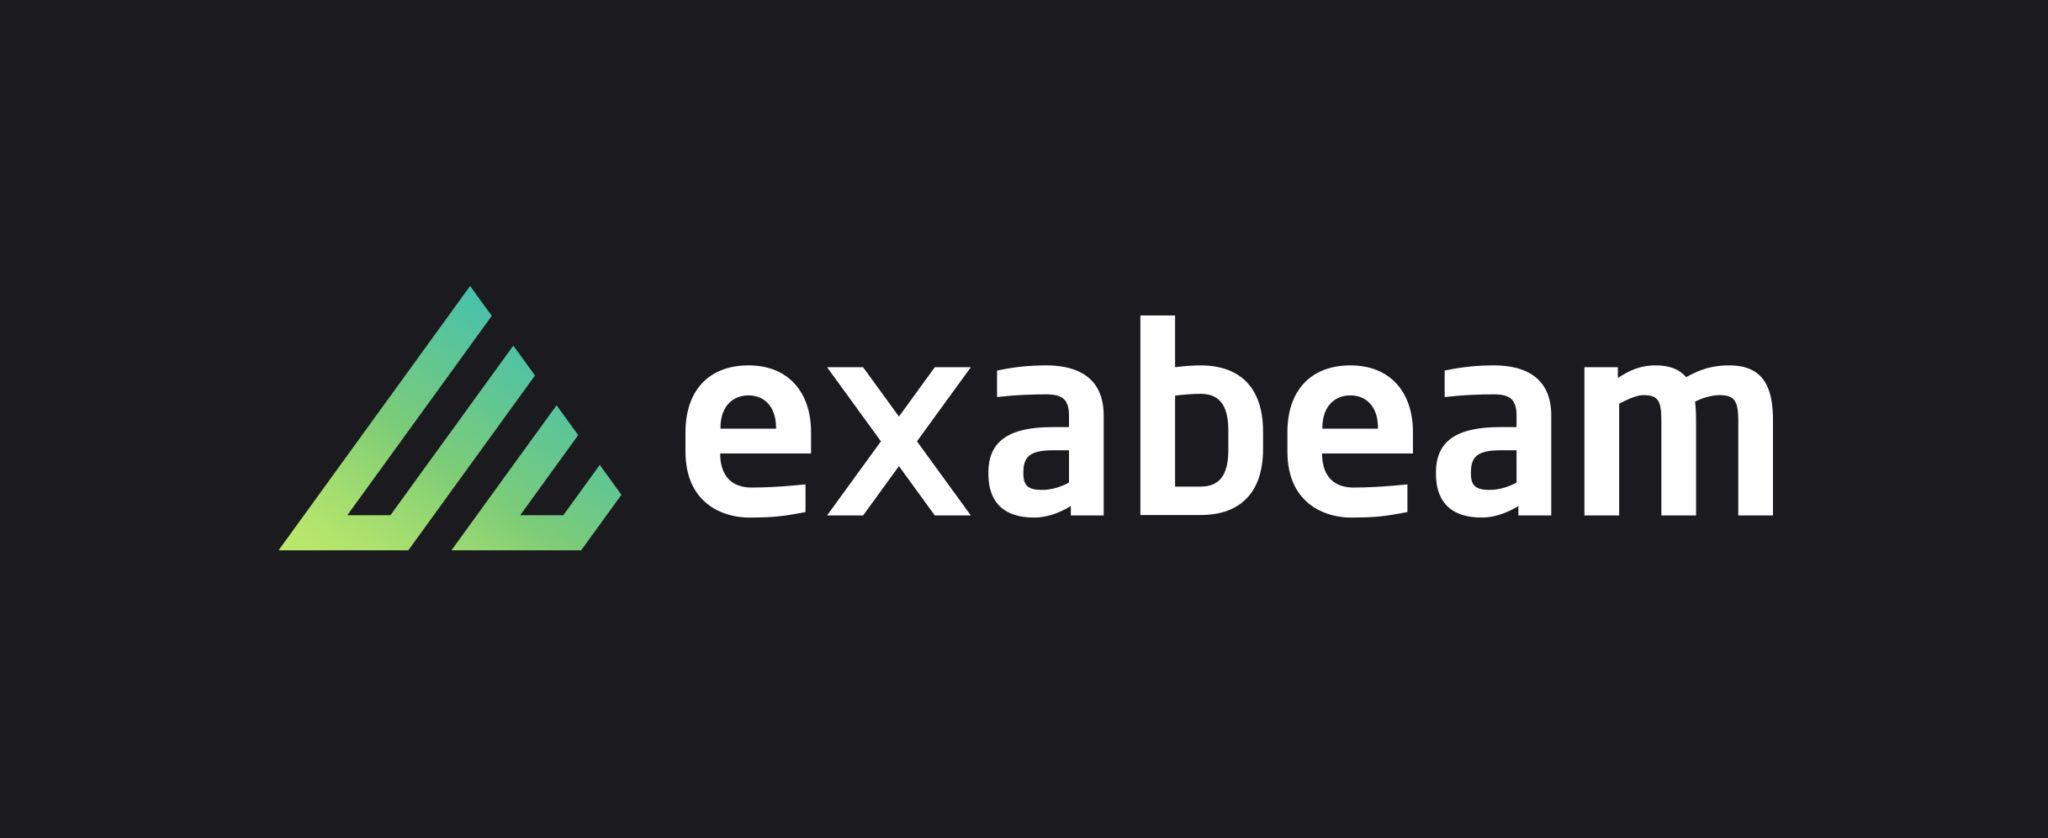 Exabeam Logo - Exabeam Logo On Dark